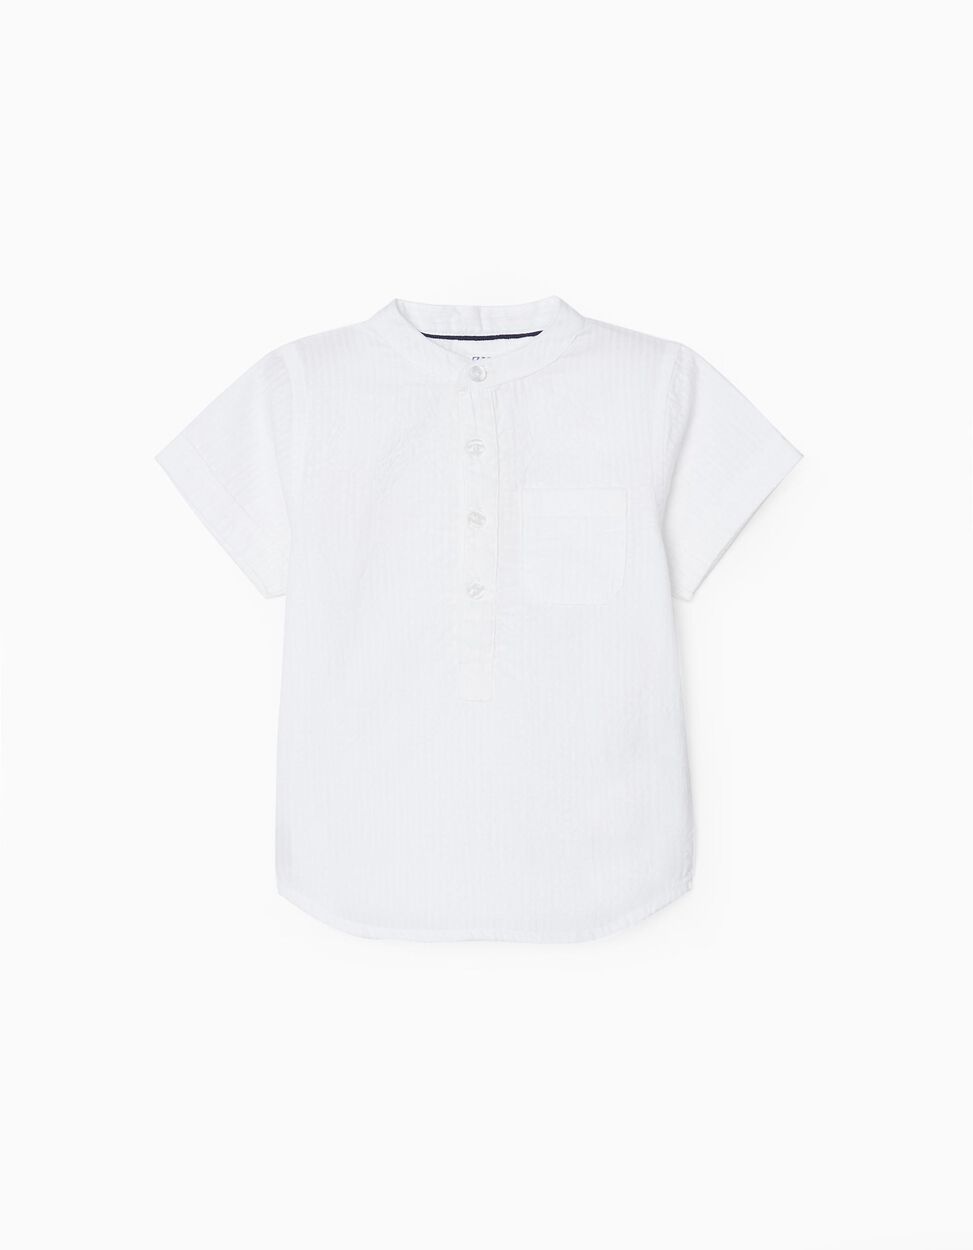 Zippy Textured Shirt For Baby Boys, White